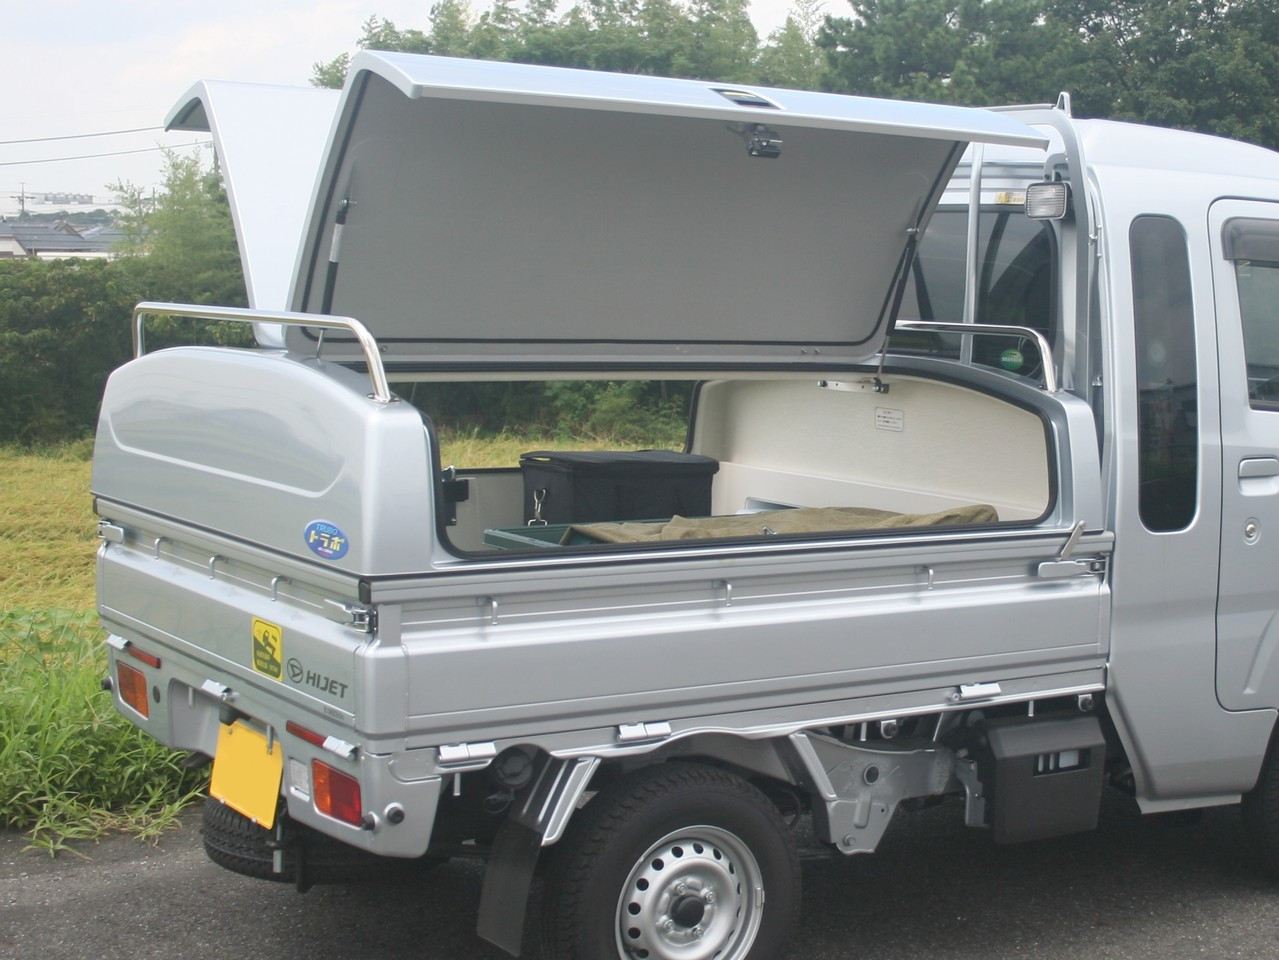 YESHMA 日本の品質トラック工具箱 荷台 ボックス アルミボックス ツールボックス 99*33*26cm コンテナ 防水 軽トラ 荷台